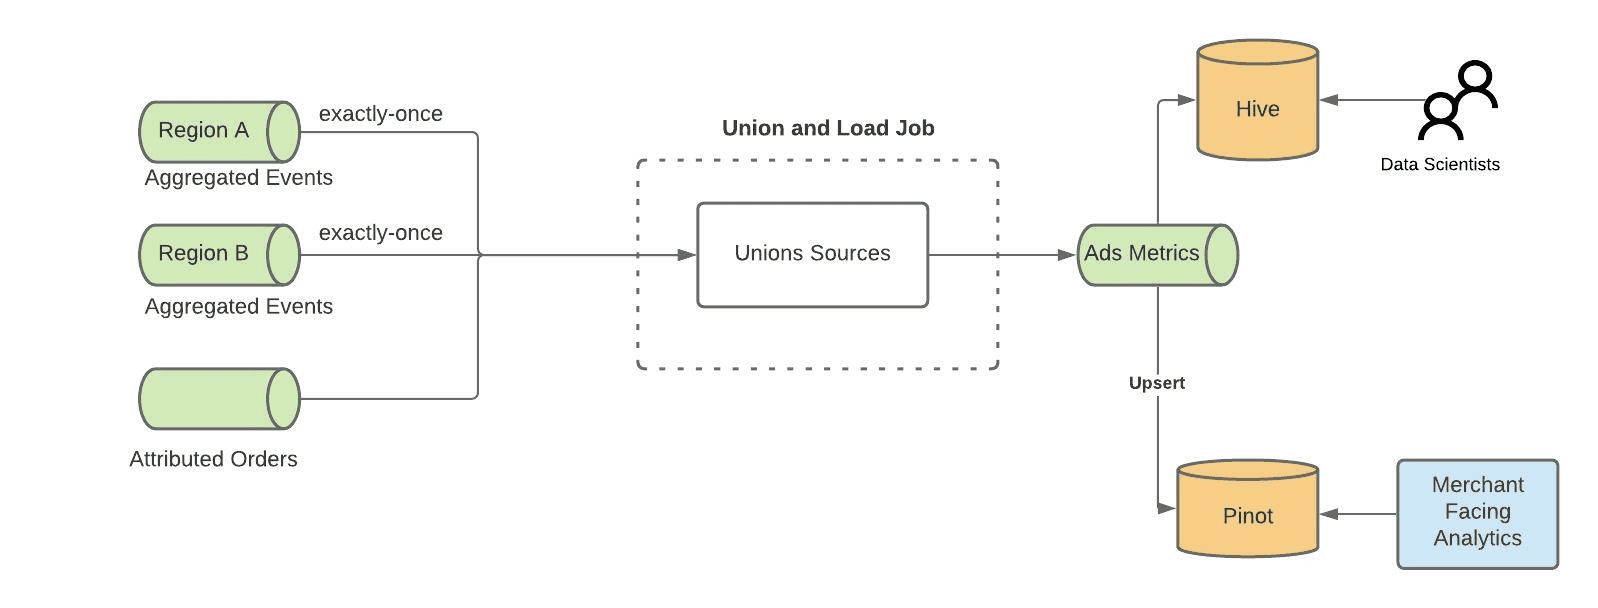 union and load job